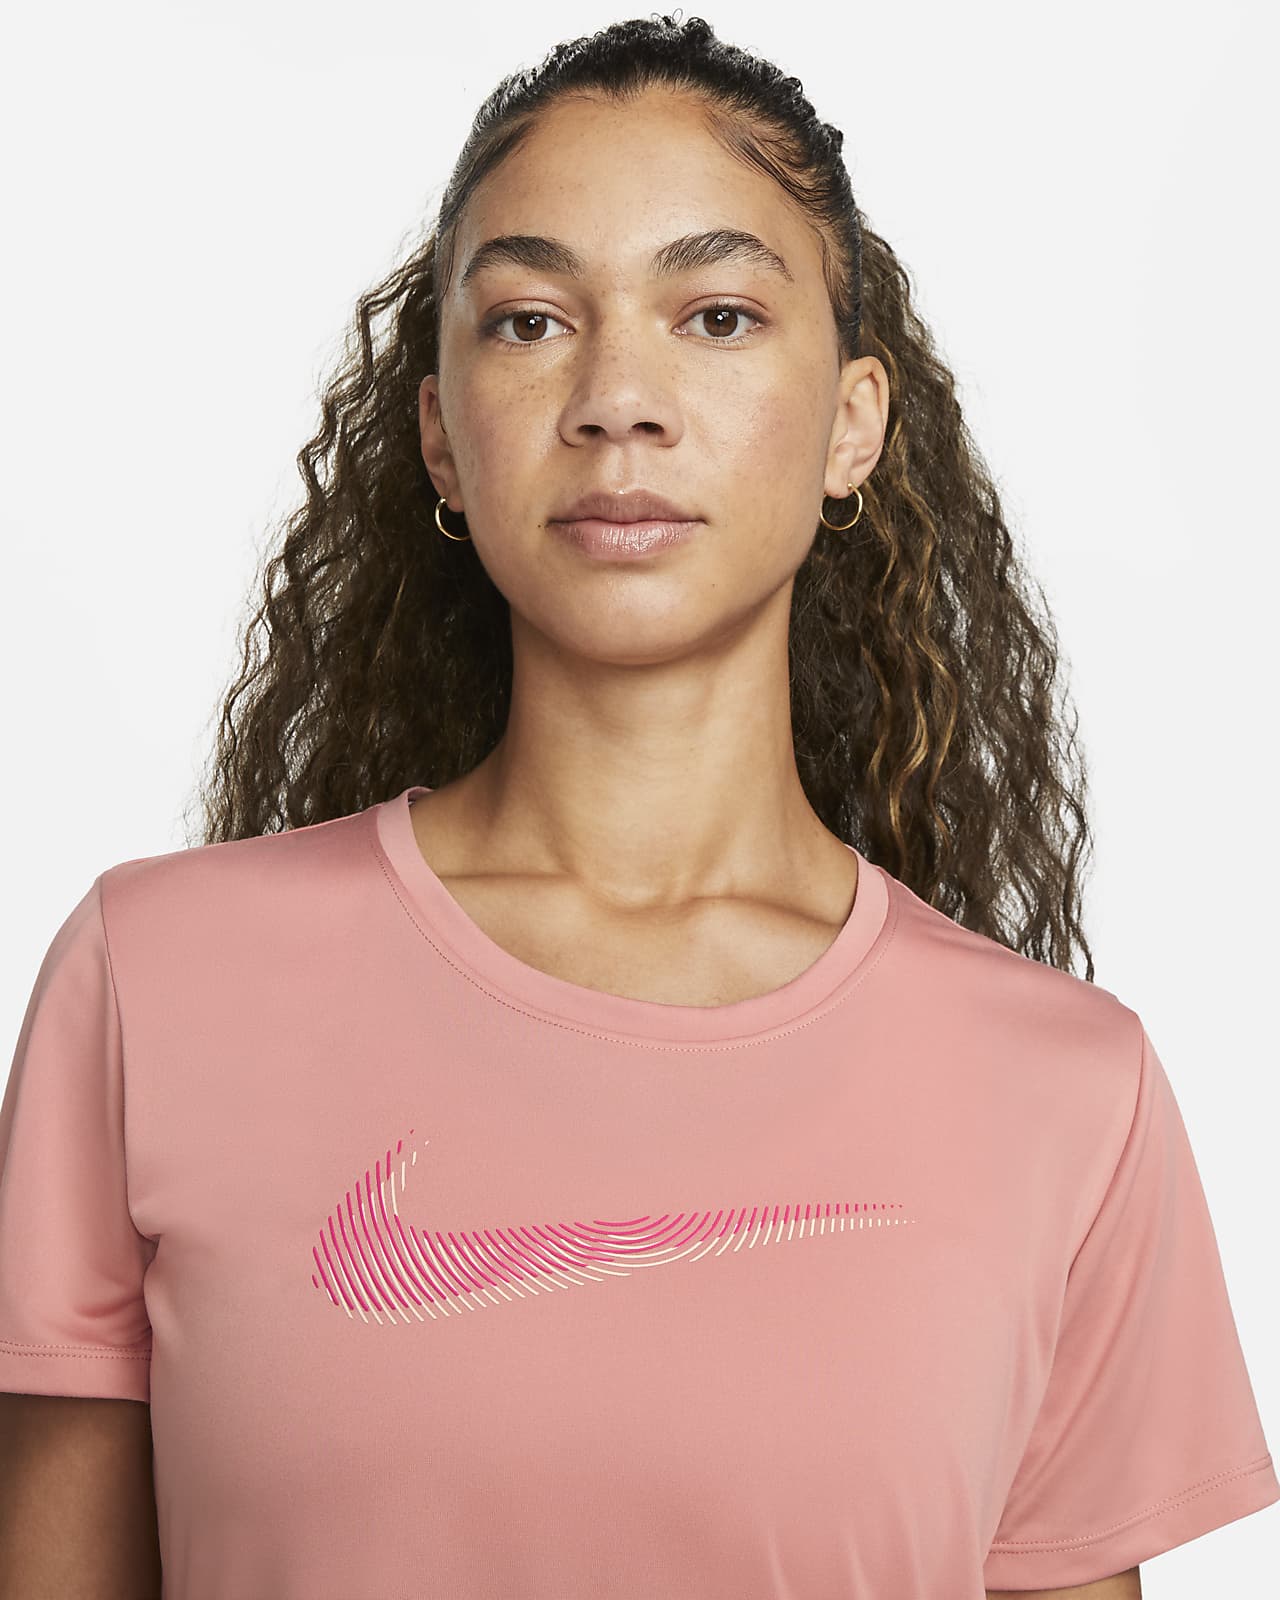 Dri-FIT SE Nike Women\'s Swoosh Top. Running Short-Sleeve Nike